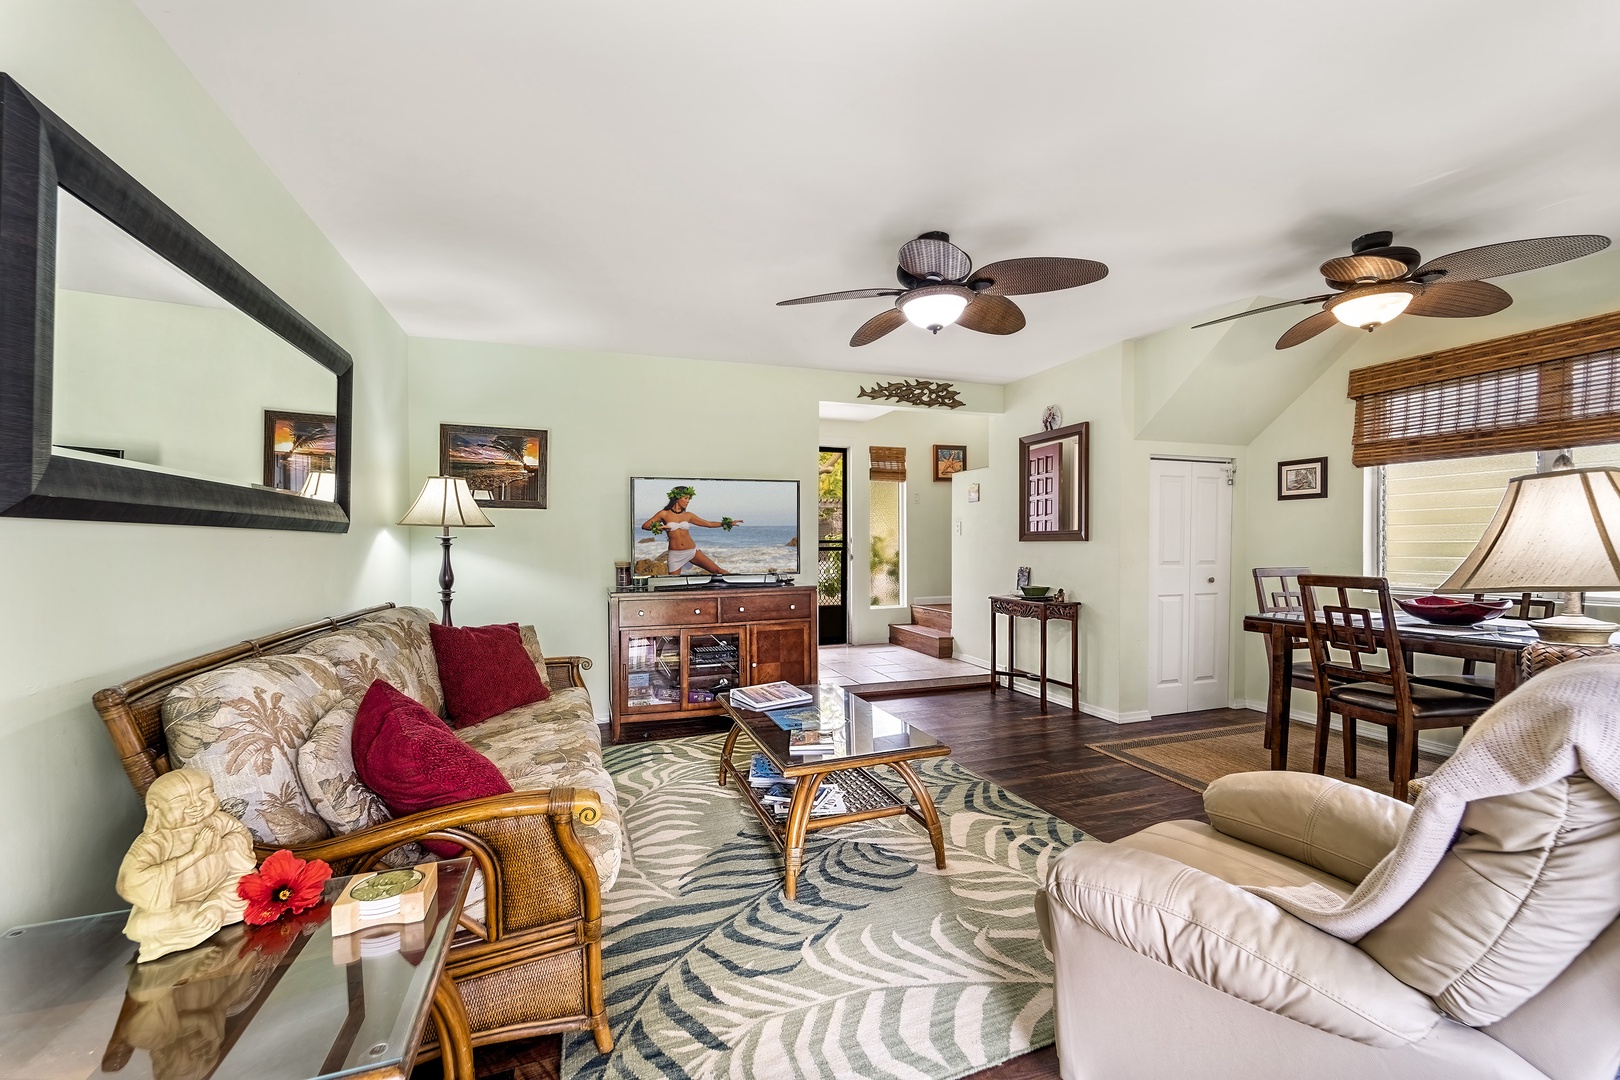 Kailua Kona Vacation Rentals, Keauhou Kona Surf & Racquet #48 - Spacious living room with A/C, Lanai Access and TV